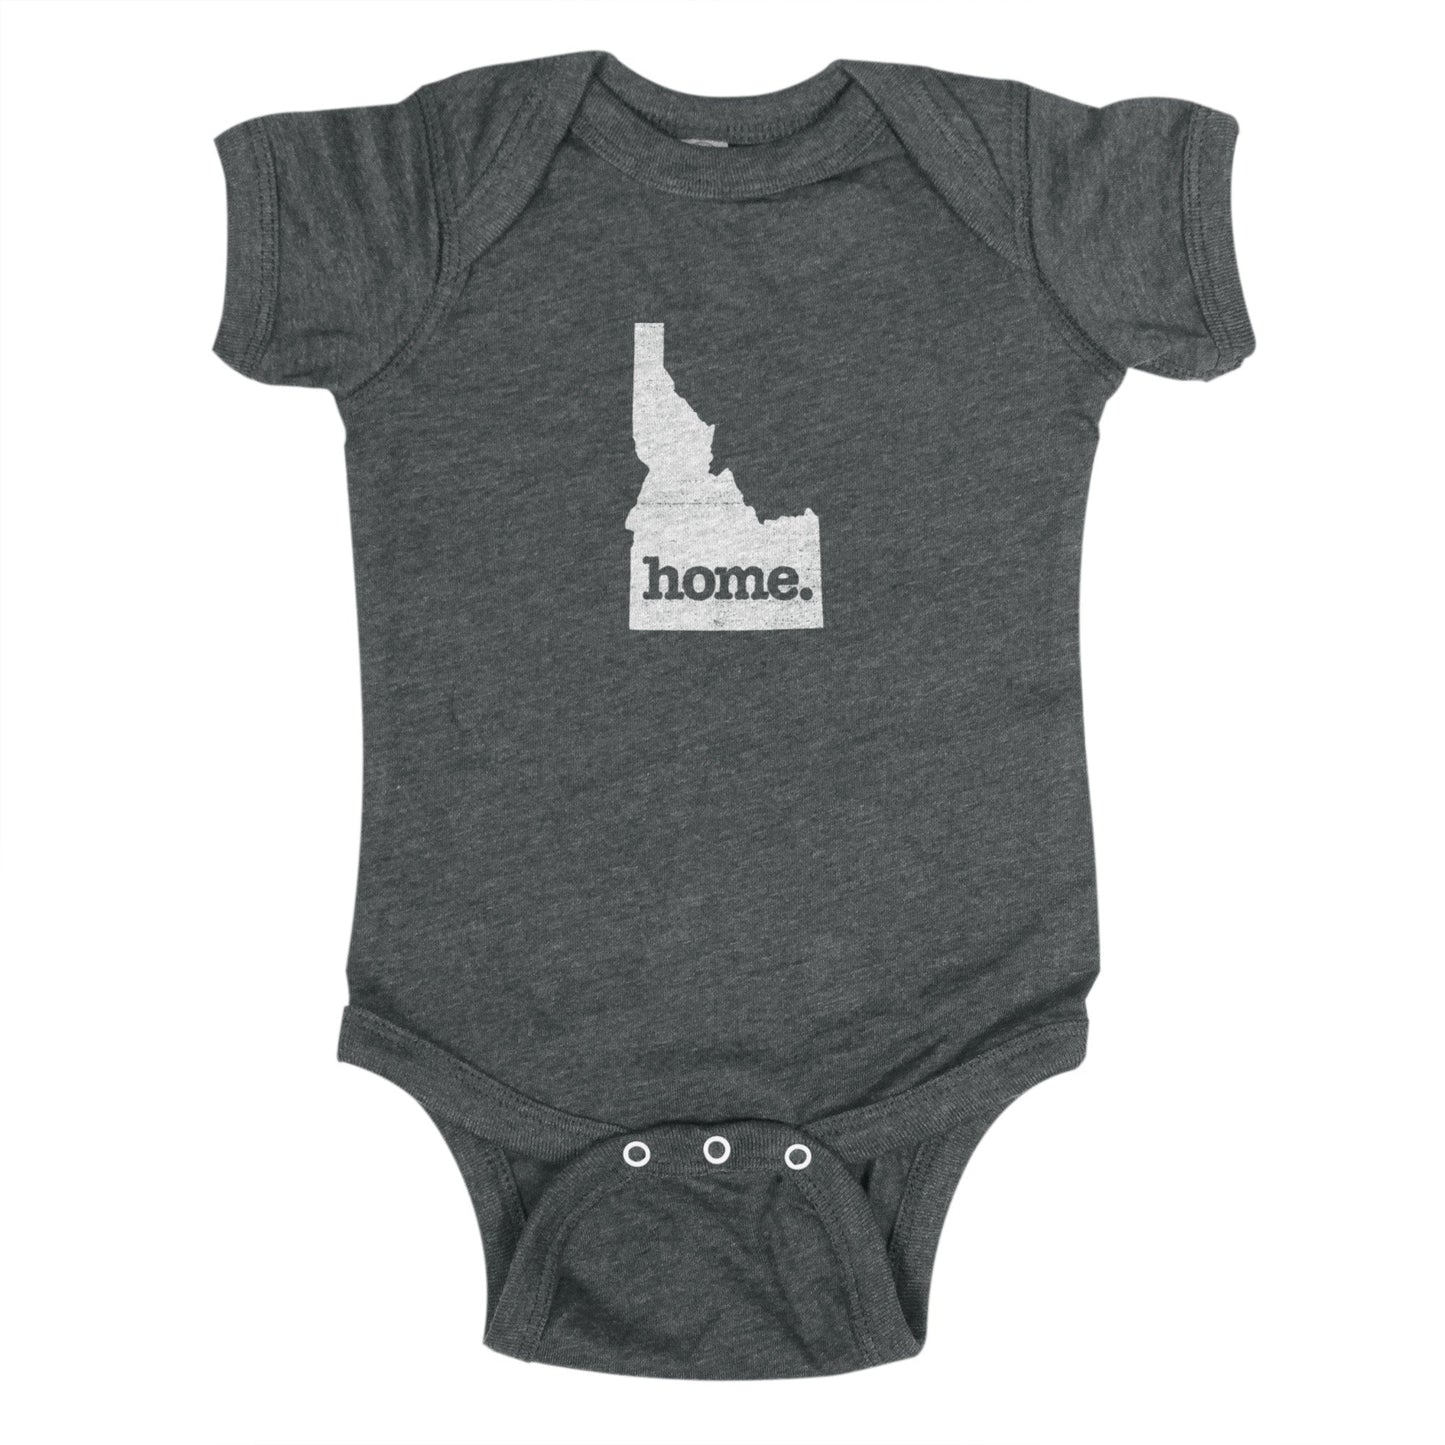 home. Baby Bodysuit - Idaho